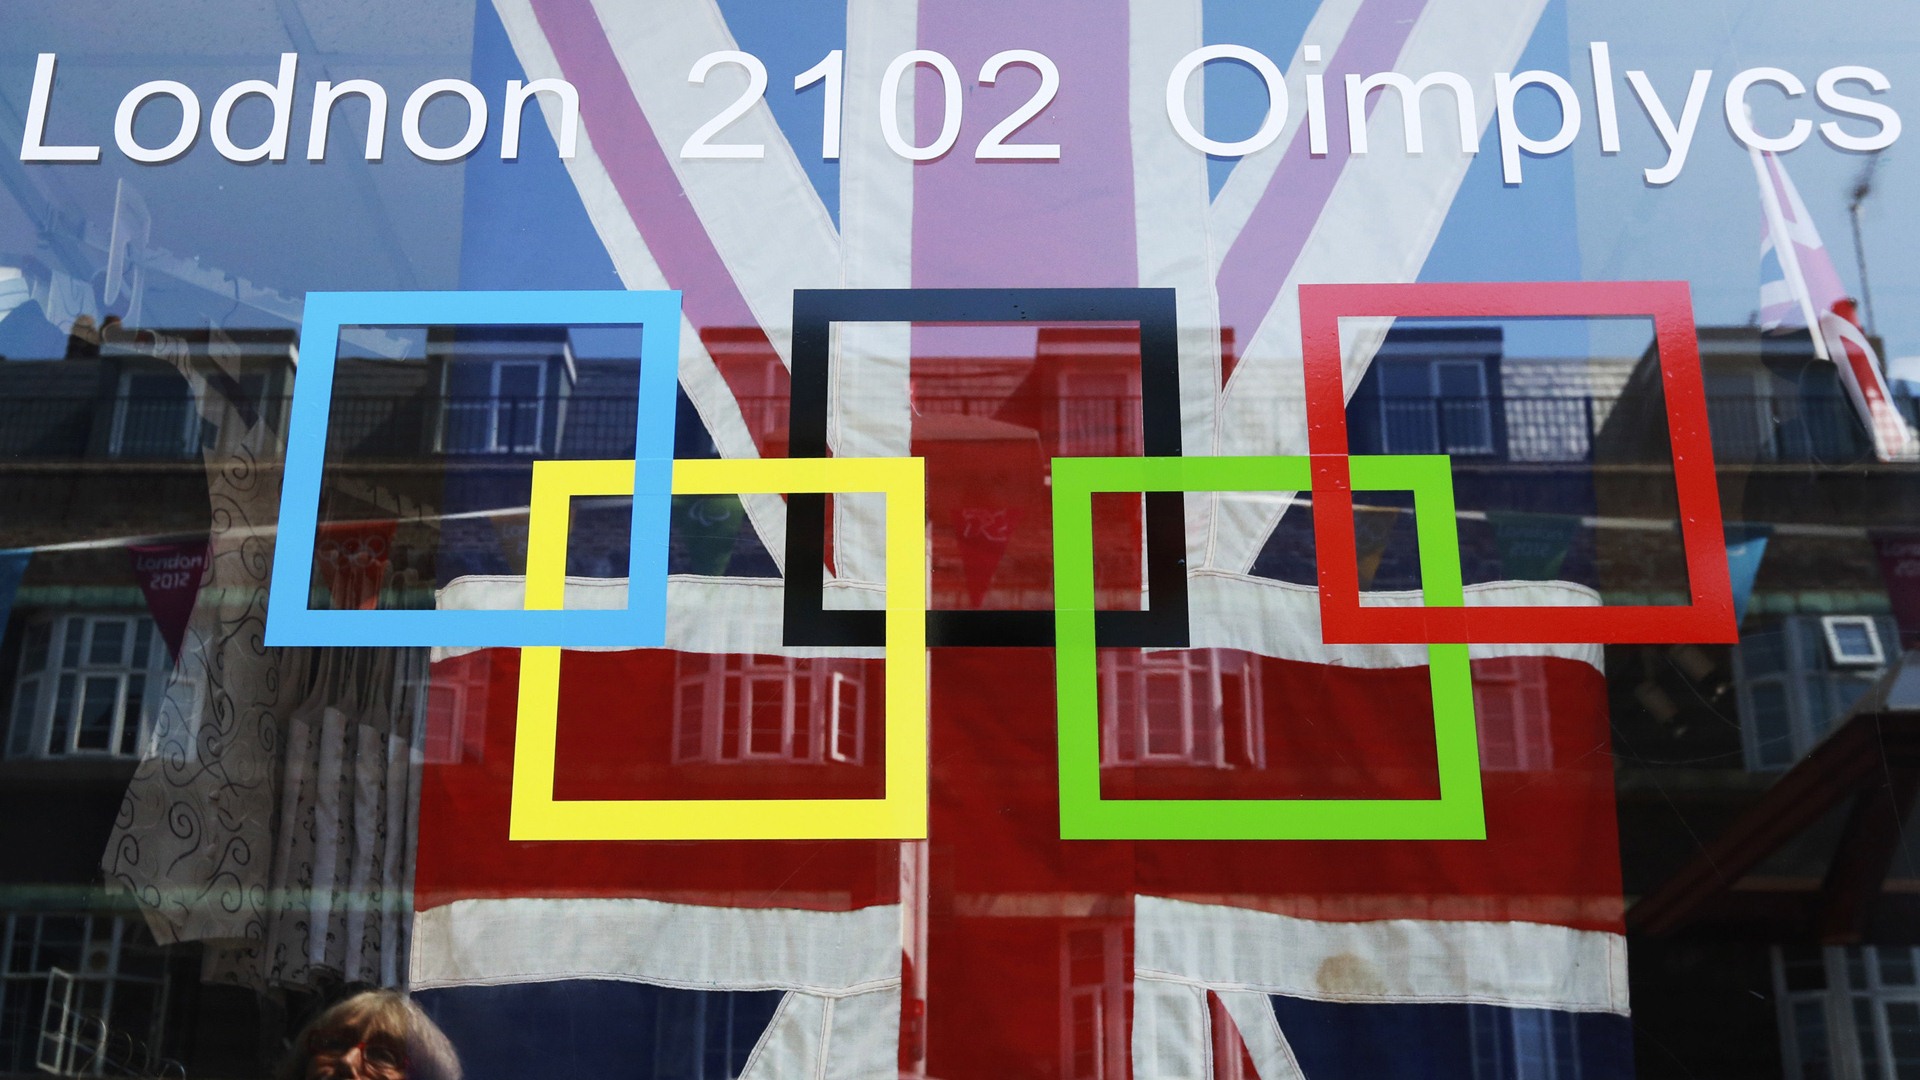 London 2012 Olympics theme wallpapers (2) #27 - 1920x1080